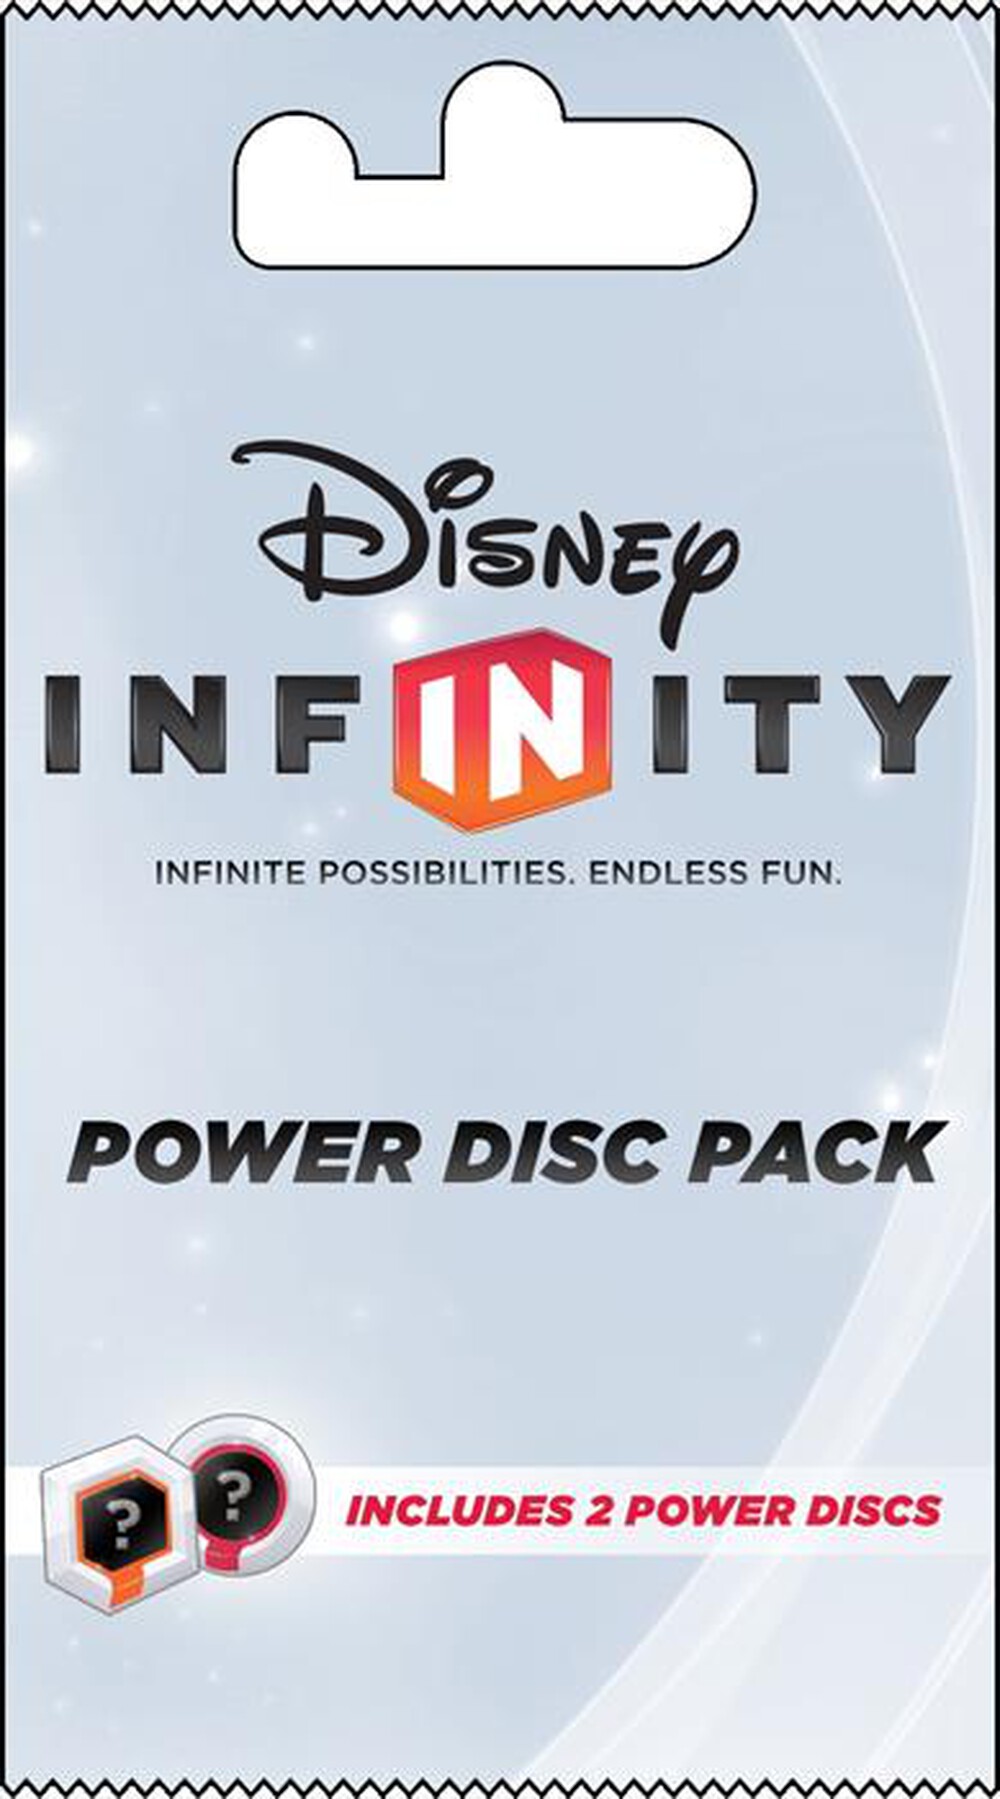 "WALT DISNEY - Disney Infinity - Power Disc Pack"